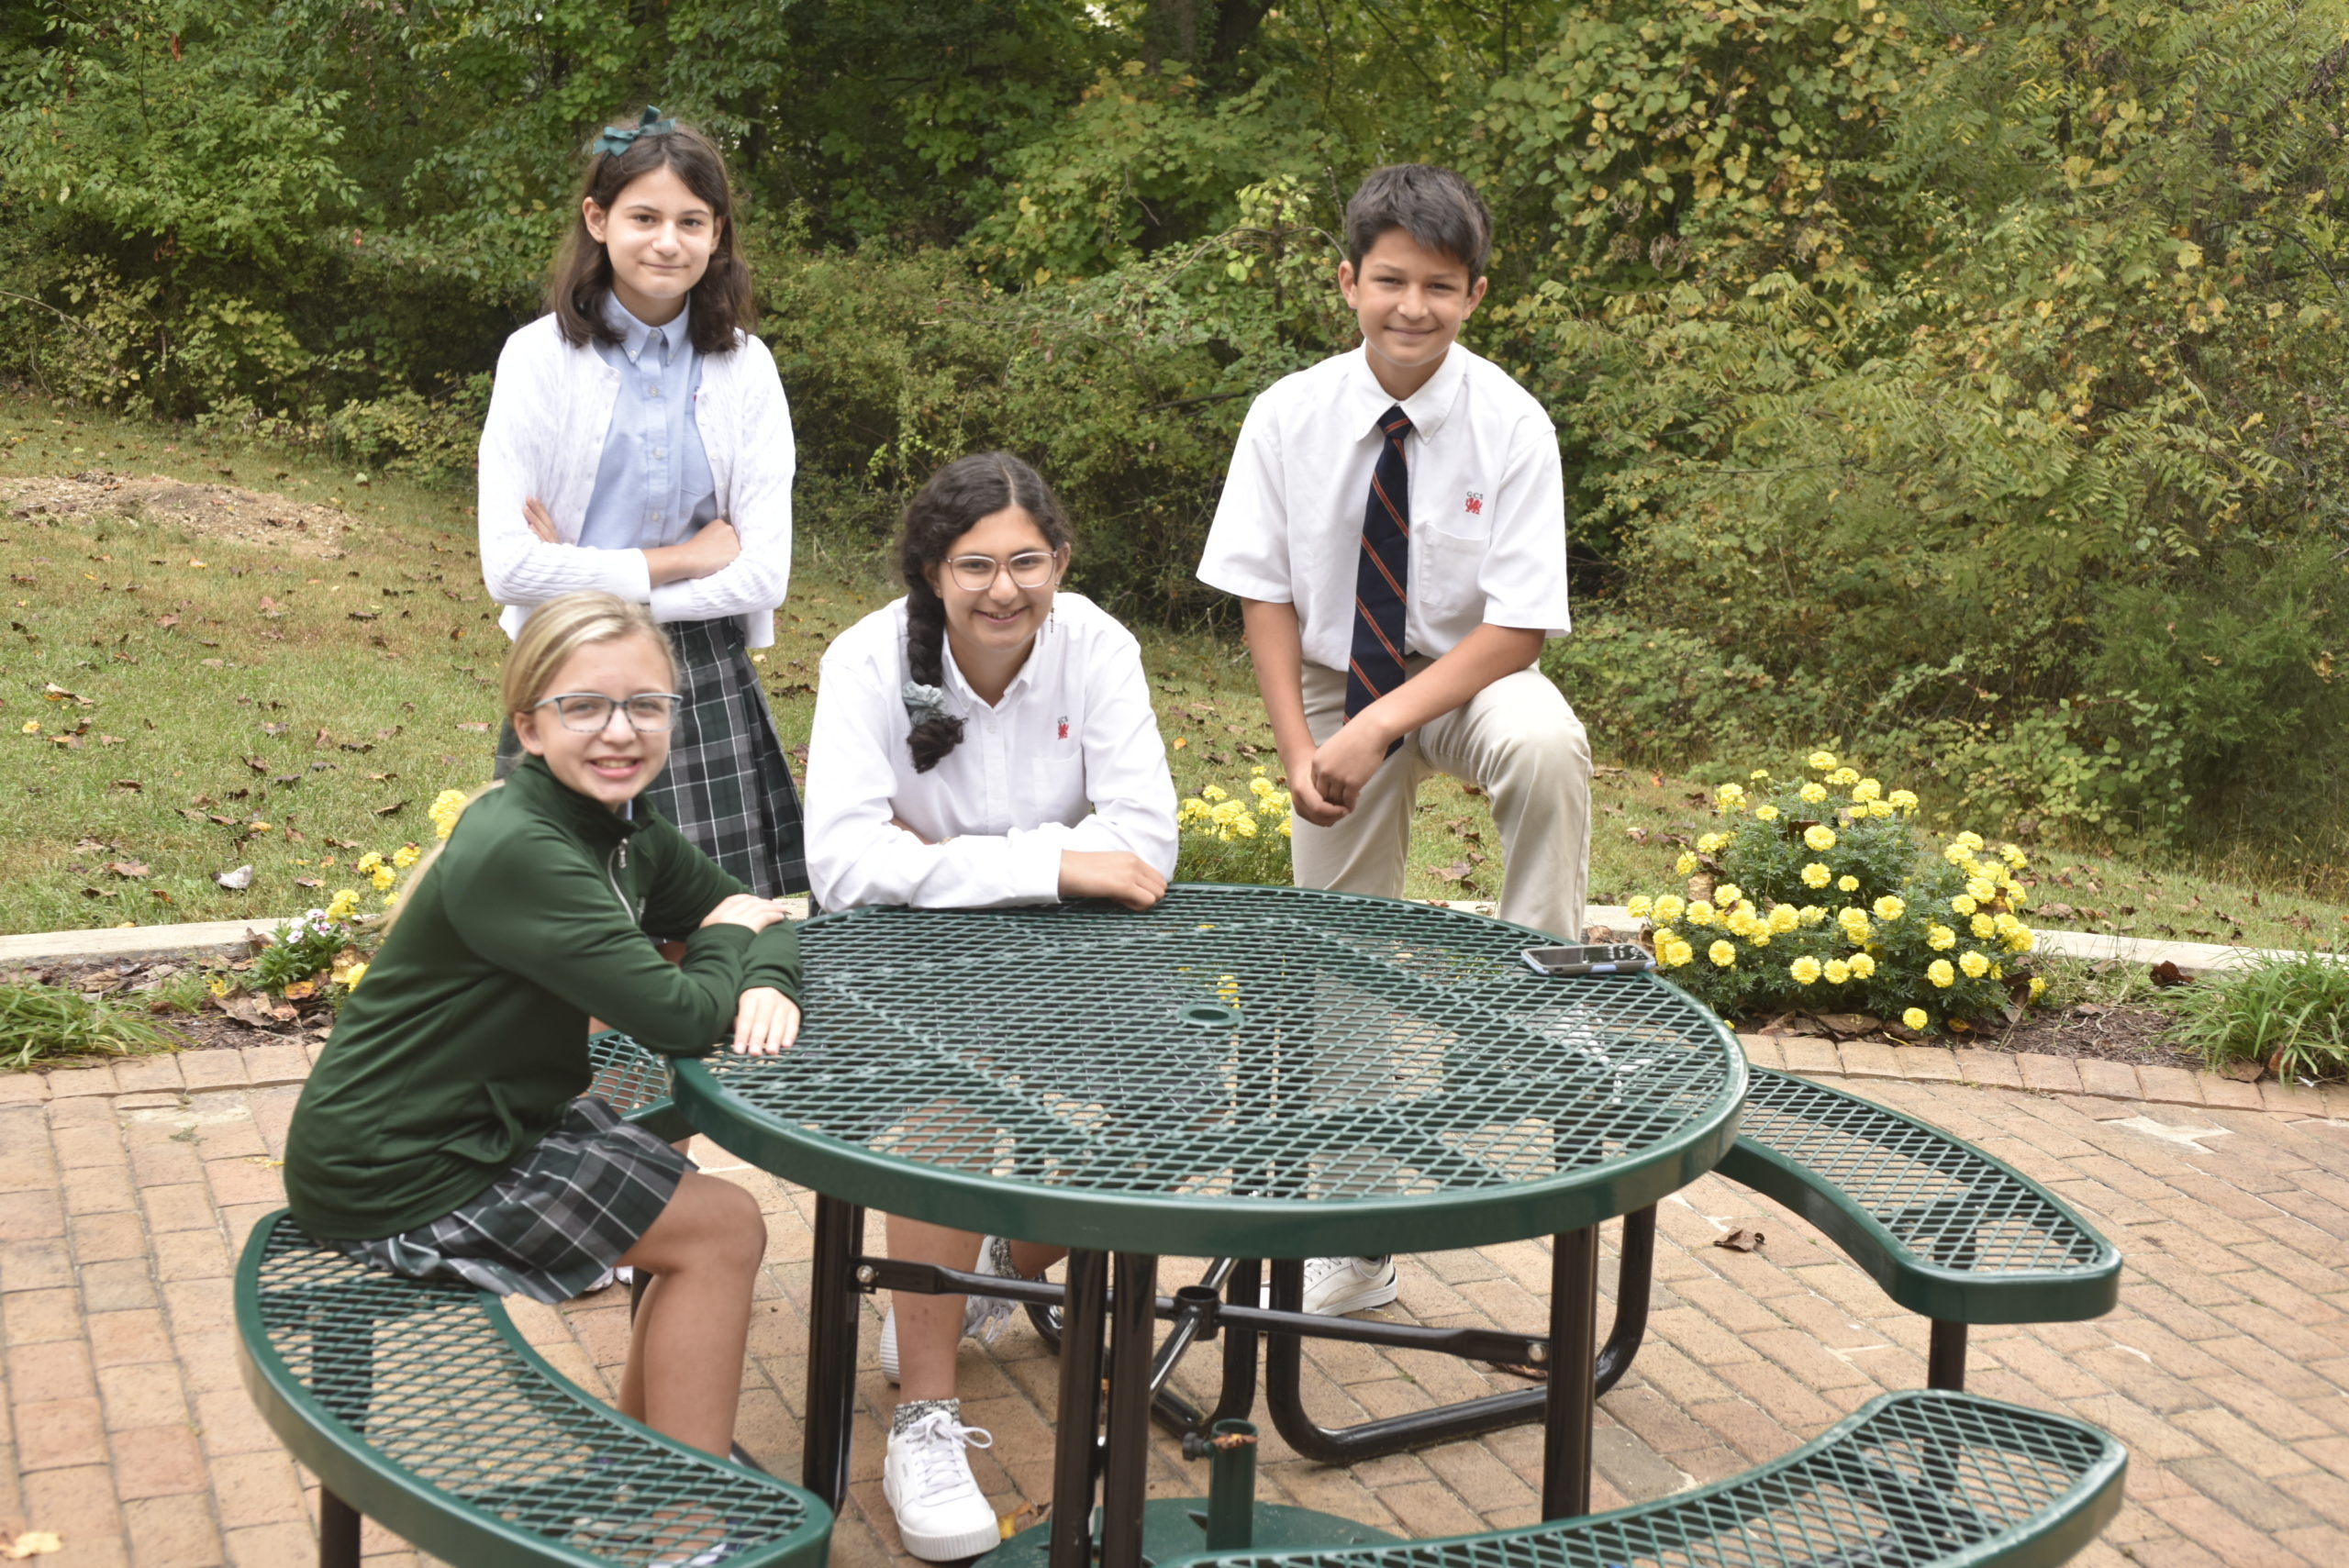 Middle School students Vita Wyatt '27, Nora Blagojevic '27, Ella Madhok '26, and Miles Naga '28 on the divison's patio.